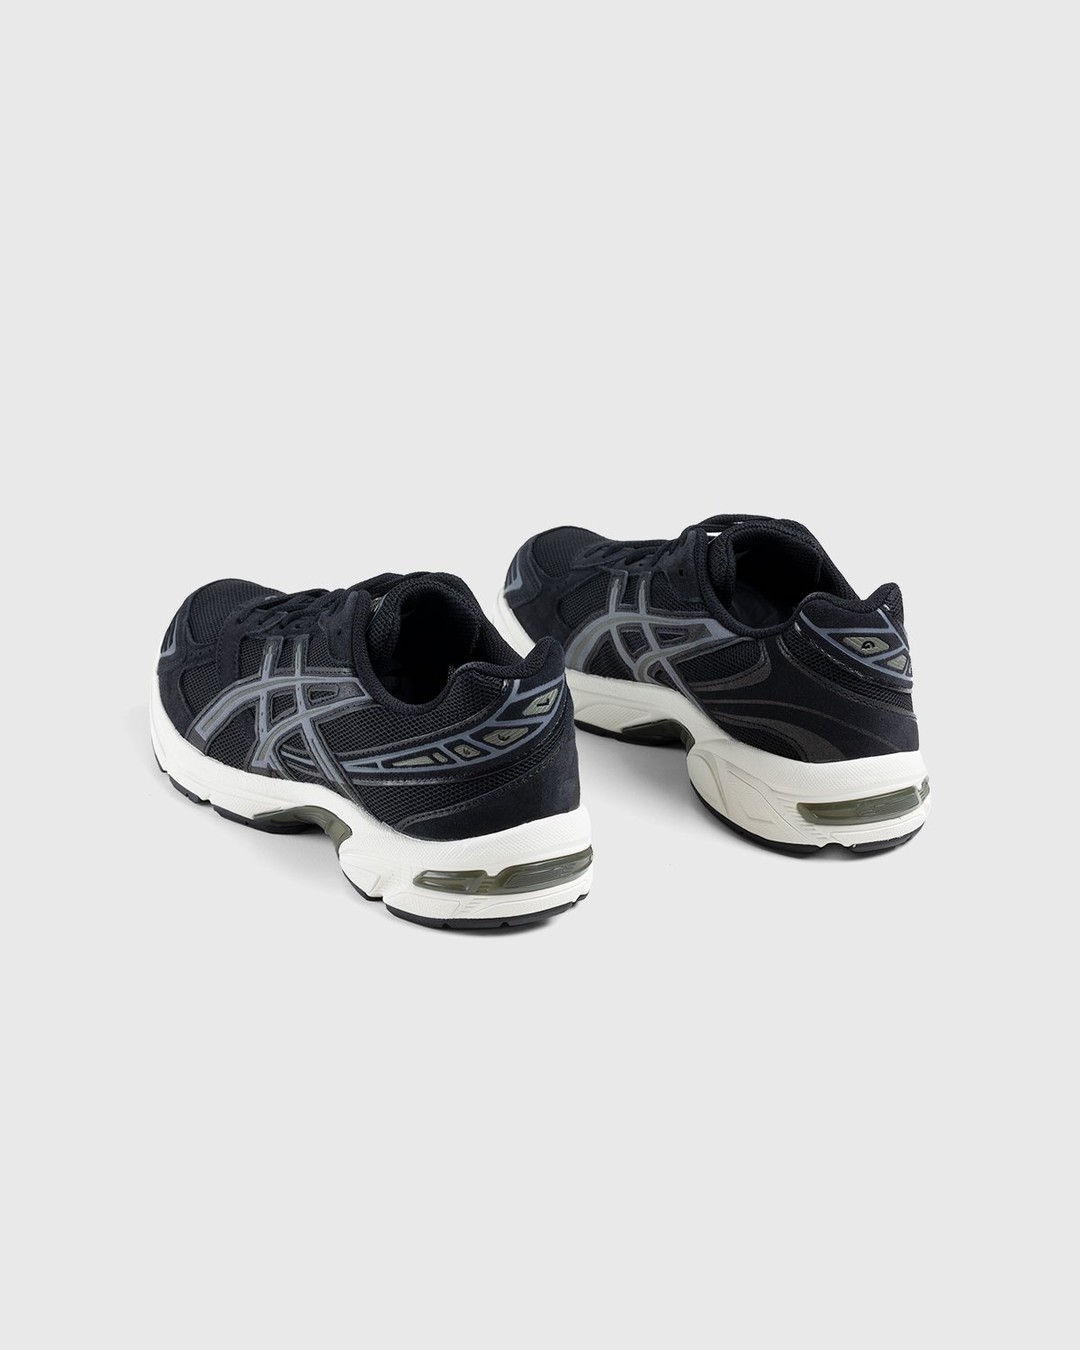 asics – Gel-1130 Black/Metropolis - Low Top Sneakers - Black - Image 4